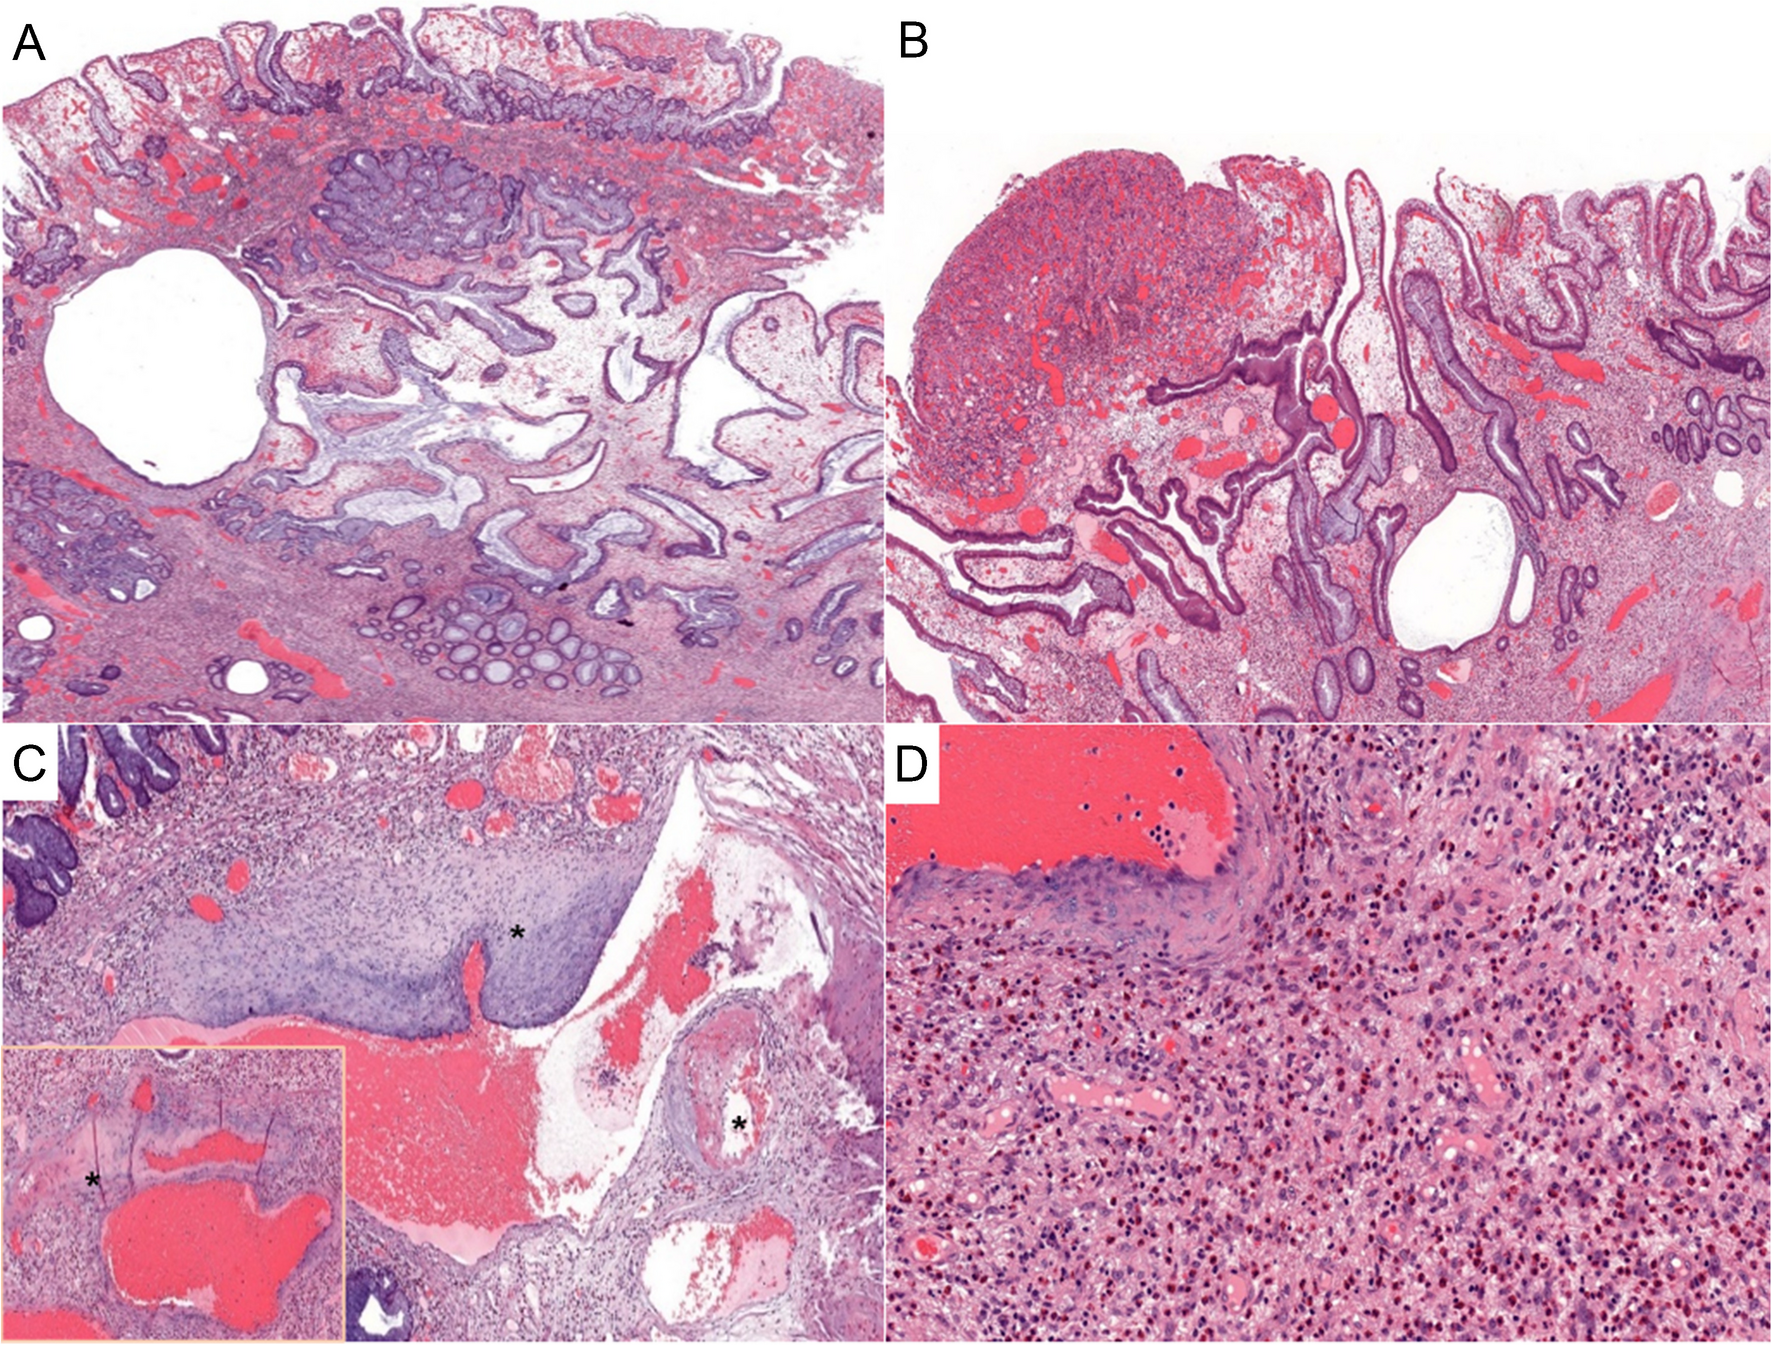 Inflammatory/juvenile-like polyps in neurofibromatosis type 1 associated with epithelial dysplasia